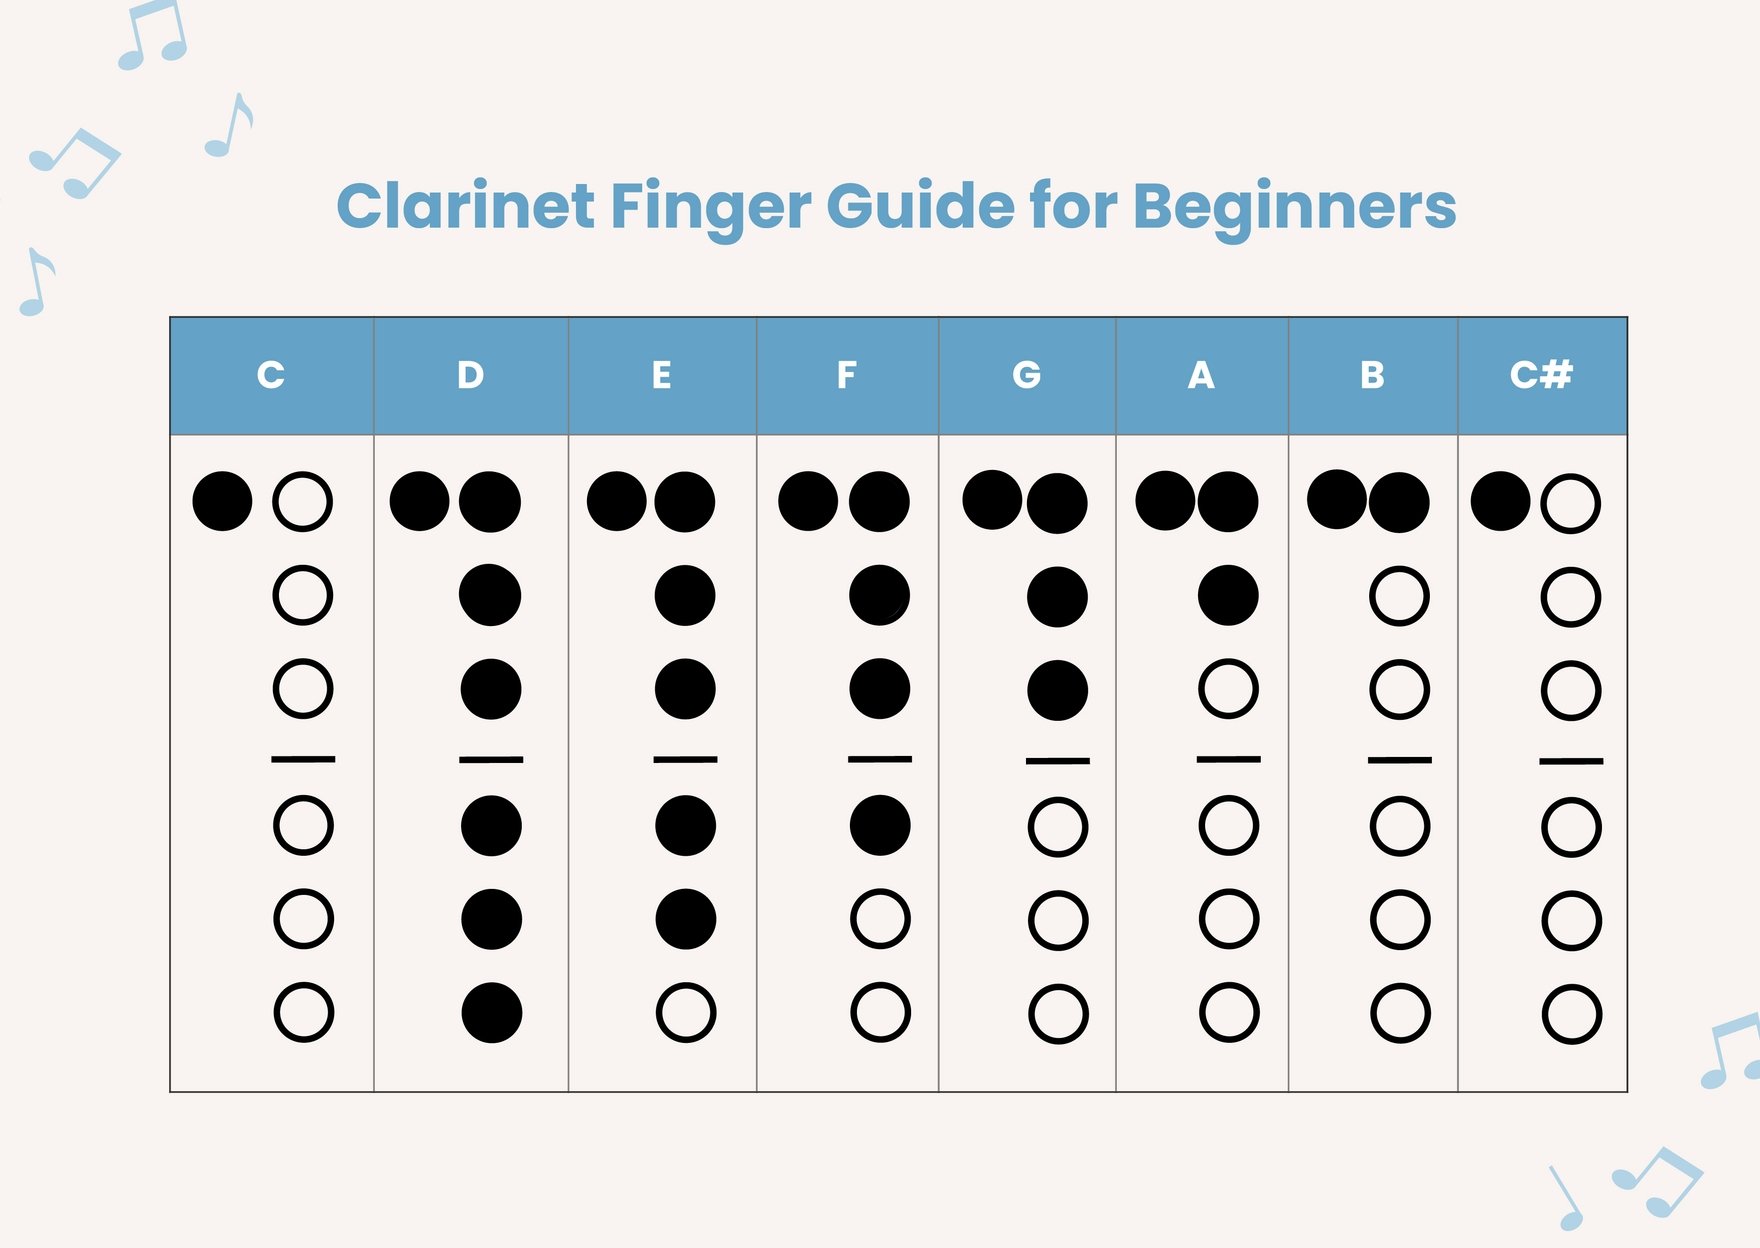 blank recorder fingering chart